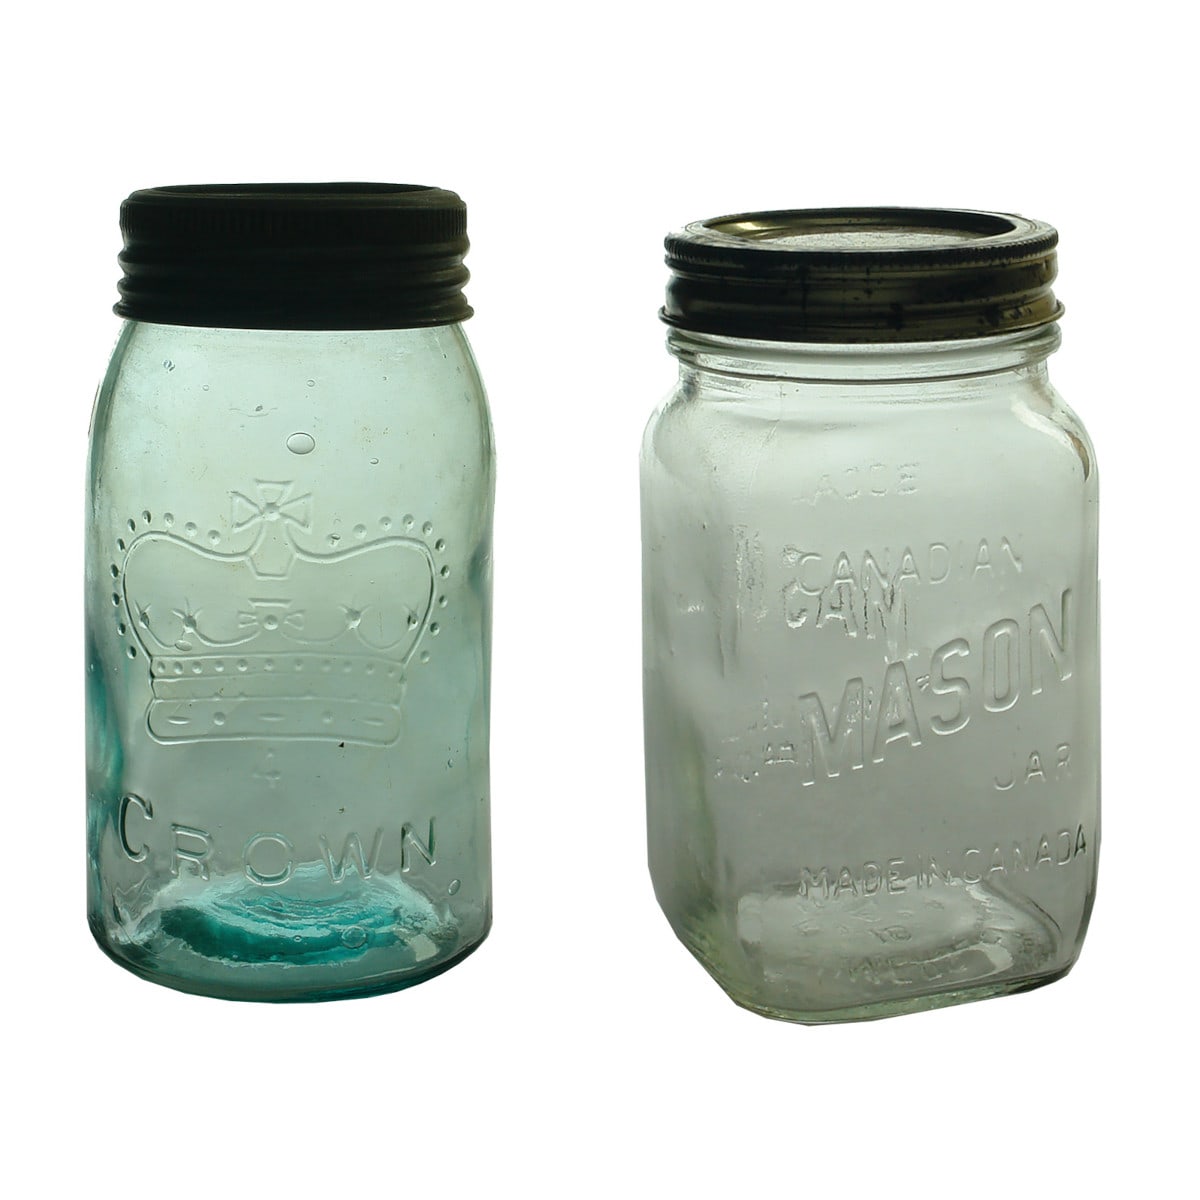 Pair of Mason type Fruit Jars: Crown with Crown glass insert lid. Bocal Canadian Mason Jar. Bernardin Snap Lid.